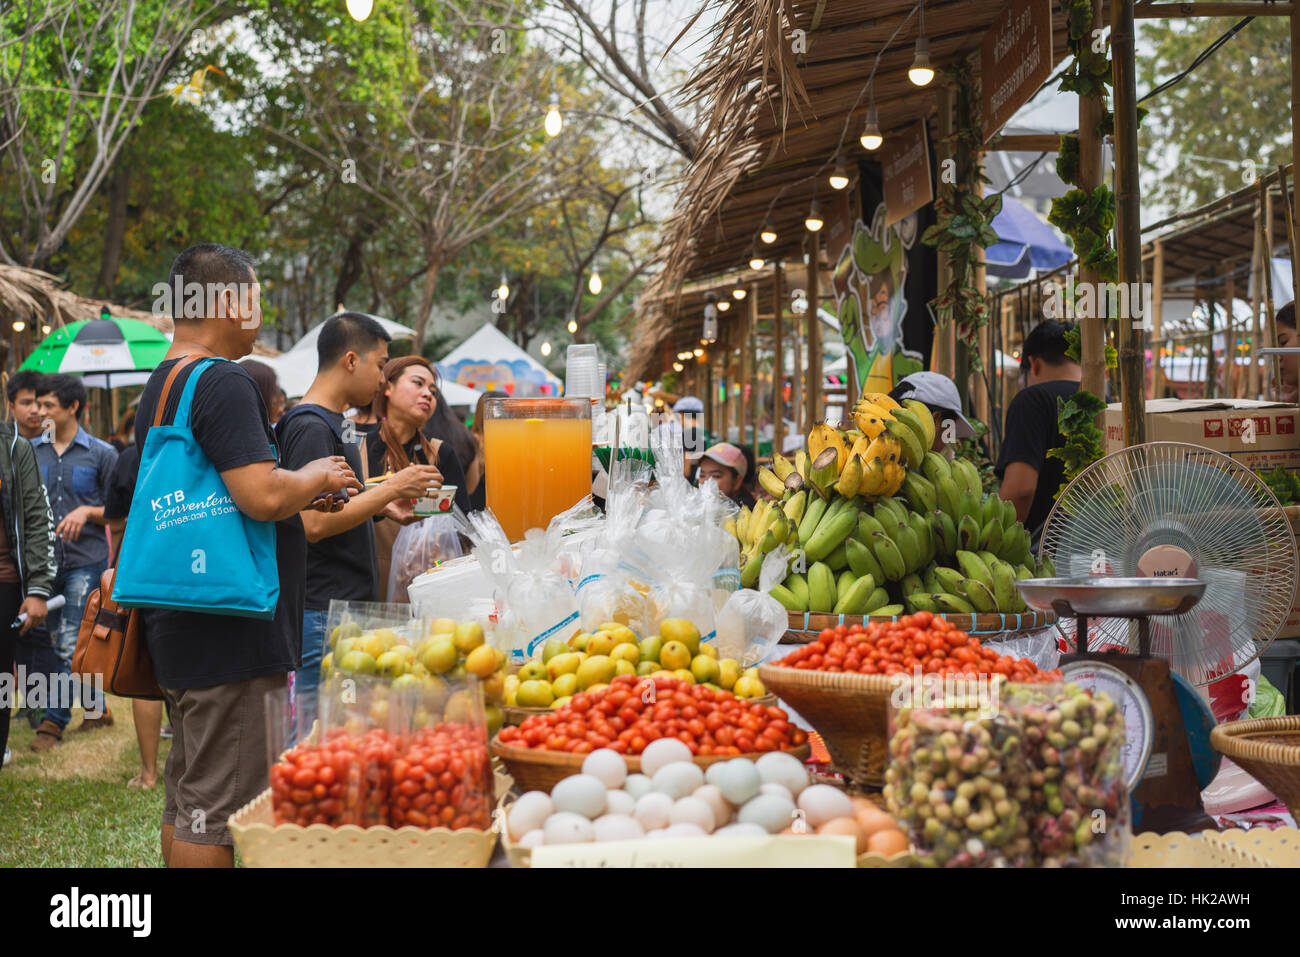 Asia Steet Food Market, People buy Fruit, Food and Drink Stock Photo